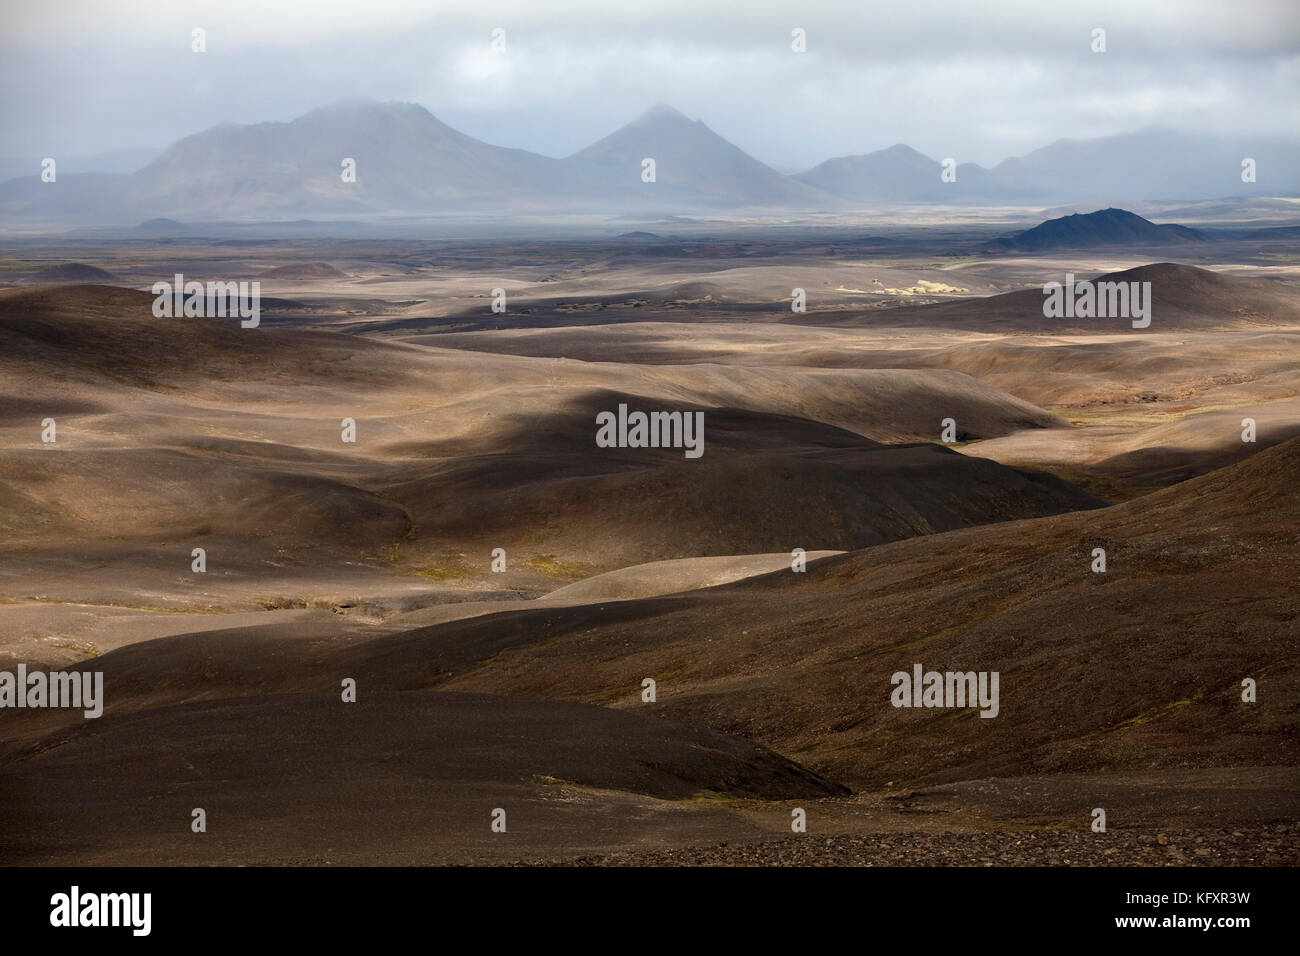 Deserto-come il paesaggio montano con luce e ombra, moedrudalsfjalsfjallgardur, highlands, isola Foto Stock